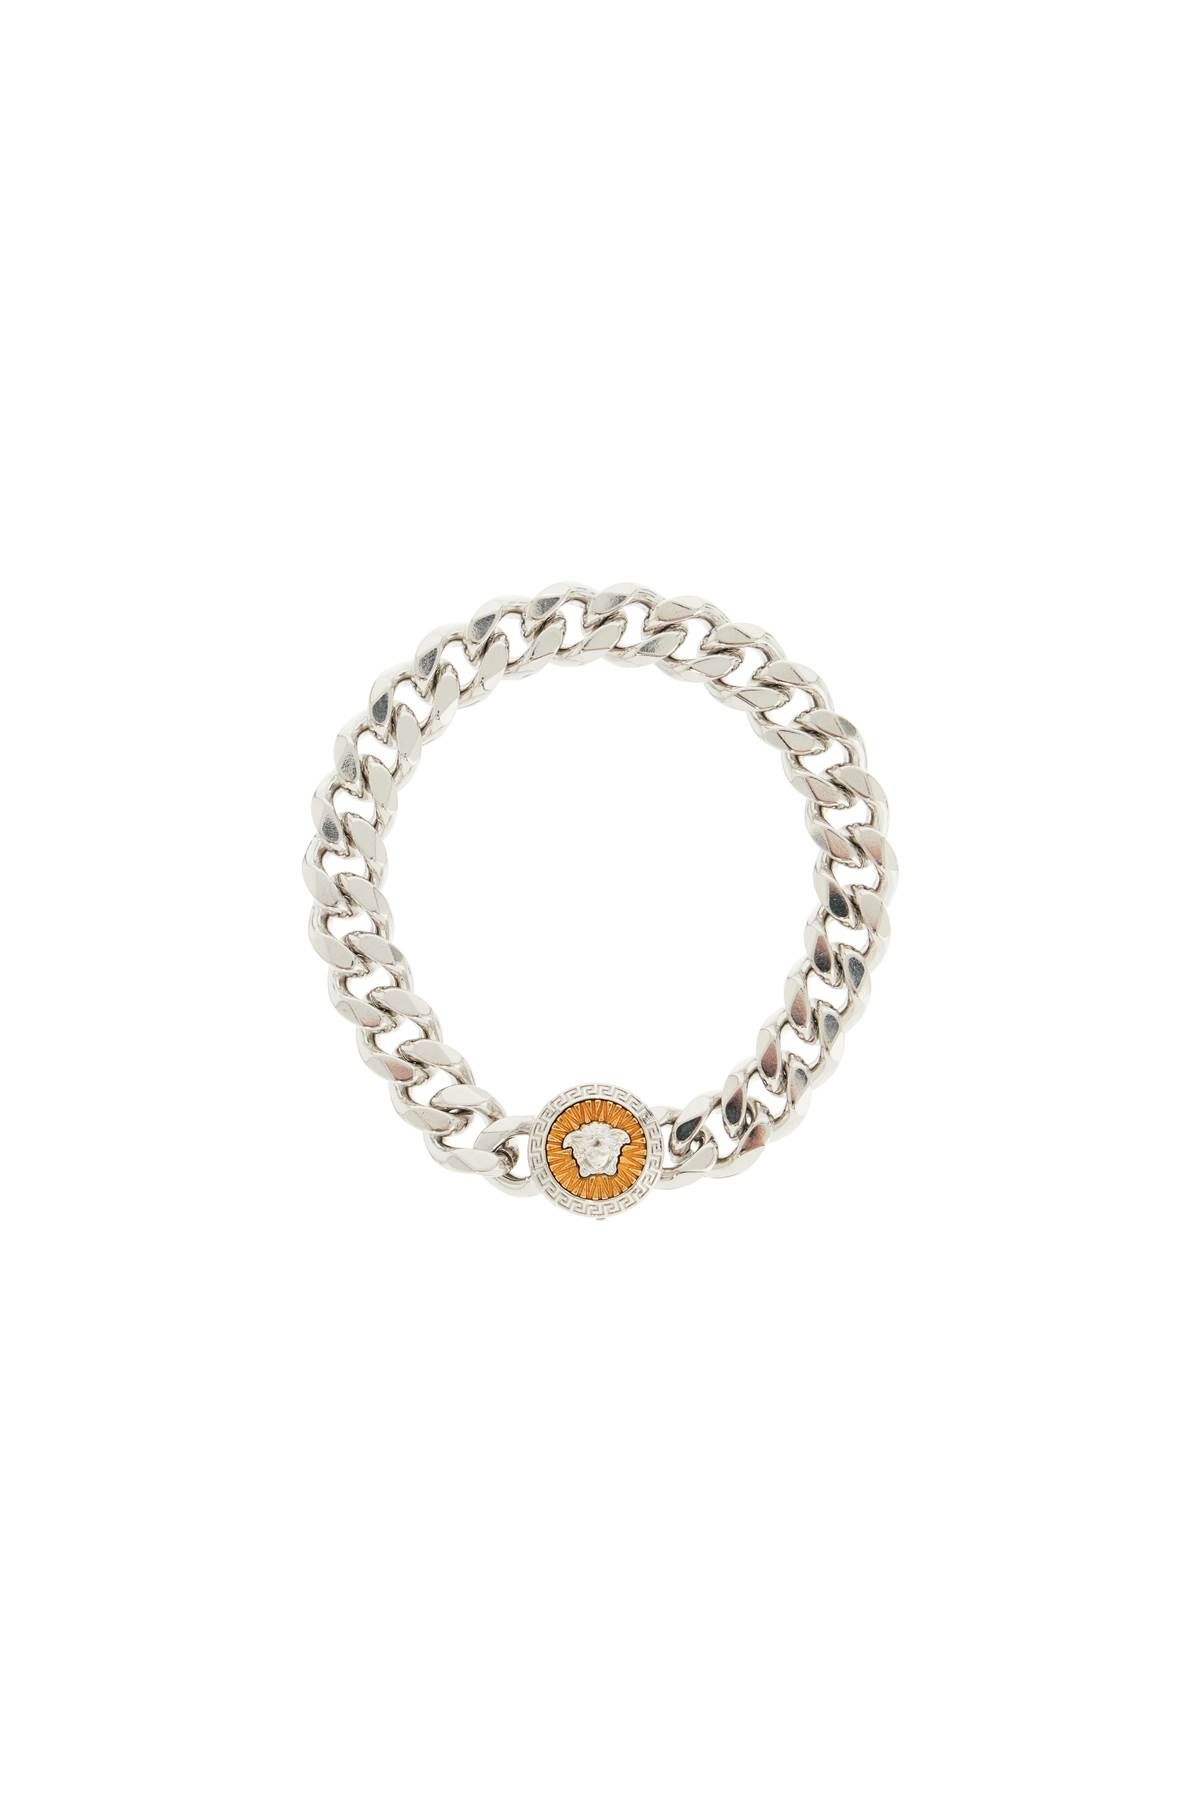 Versace VERSACE "chain bracelet with medusa charm